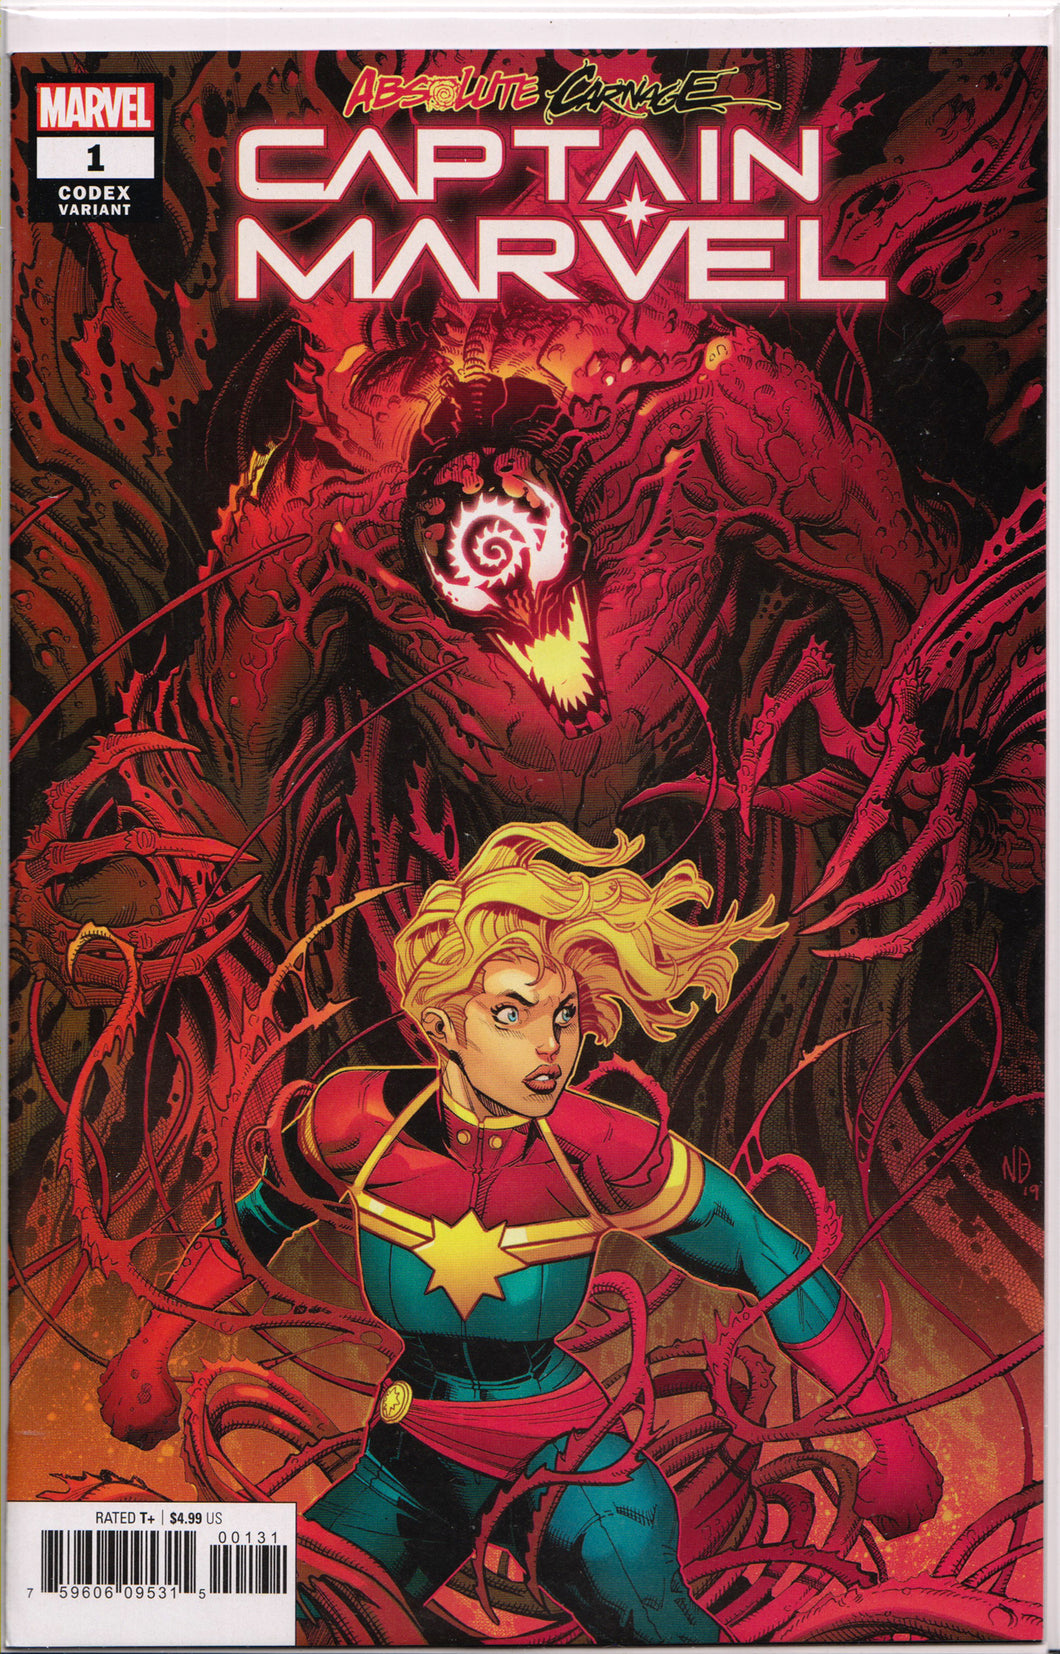 ABSOLUTE CARNAGE: CAPTAIN MARVEL #1 (CODEX VARIANT) COMIC BOOK ~ Marvel Comics